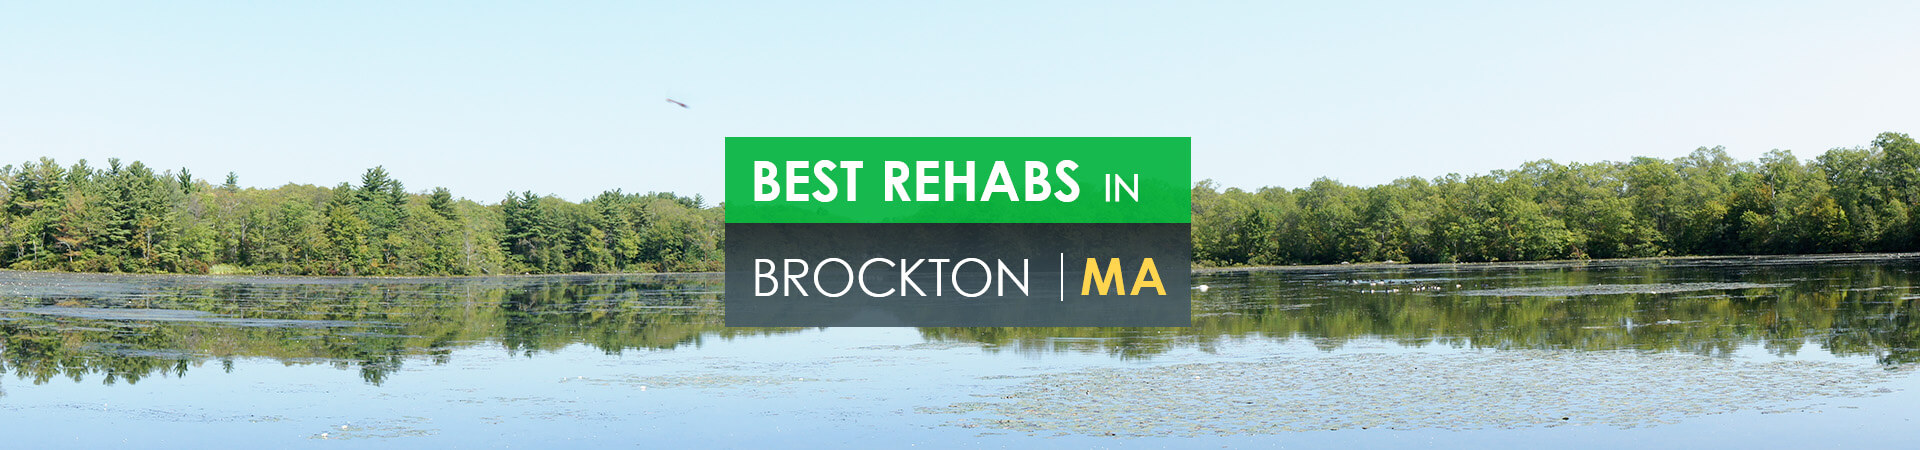 Best rehabs in Brockton, MA